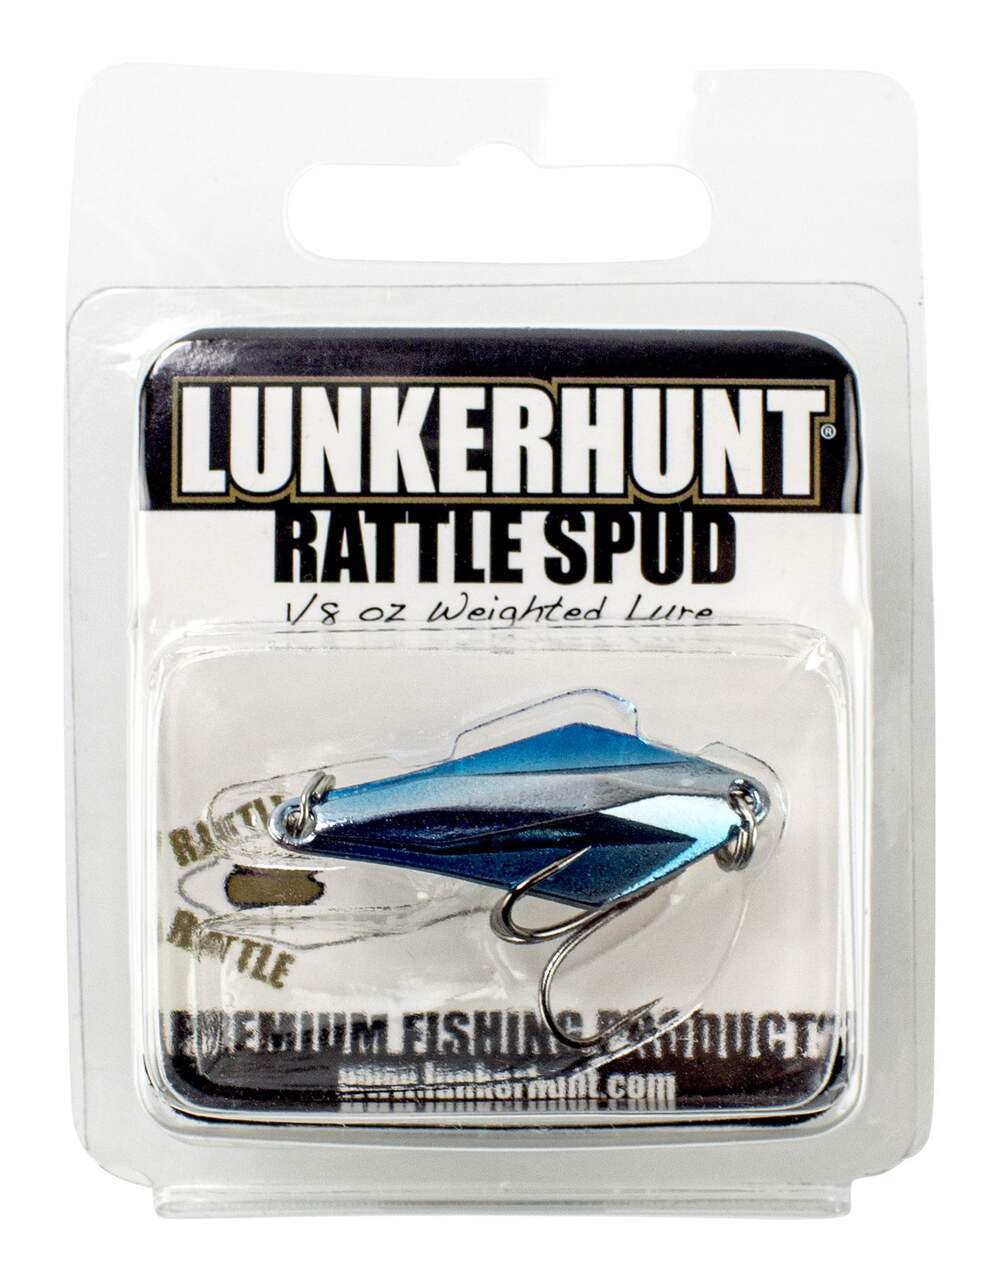 Lunkerhunt Ice Fishing Rattle Spud, 1/8-oz